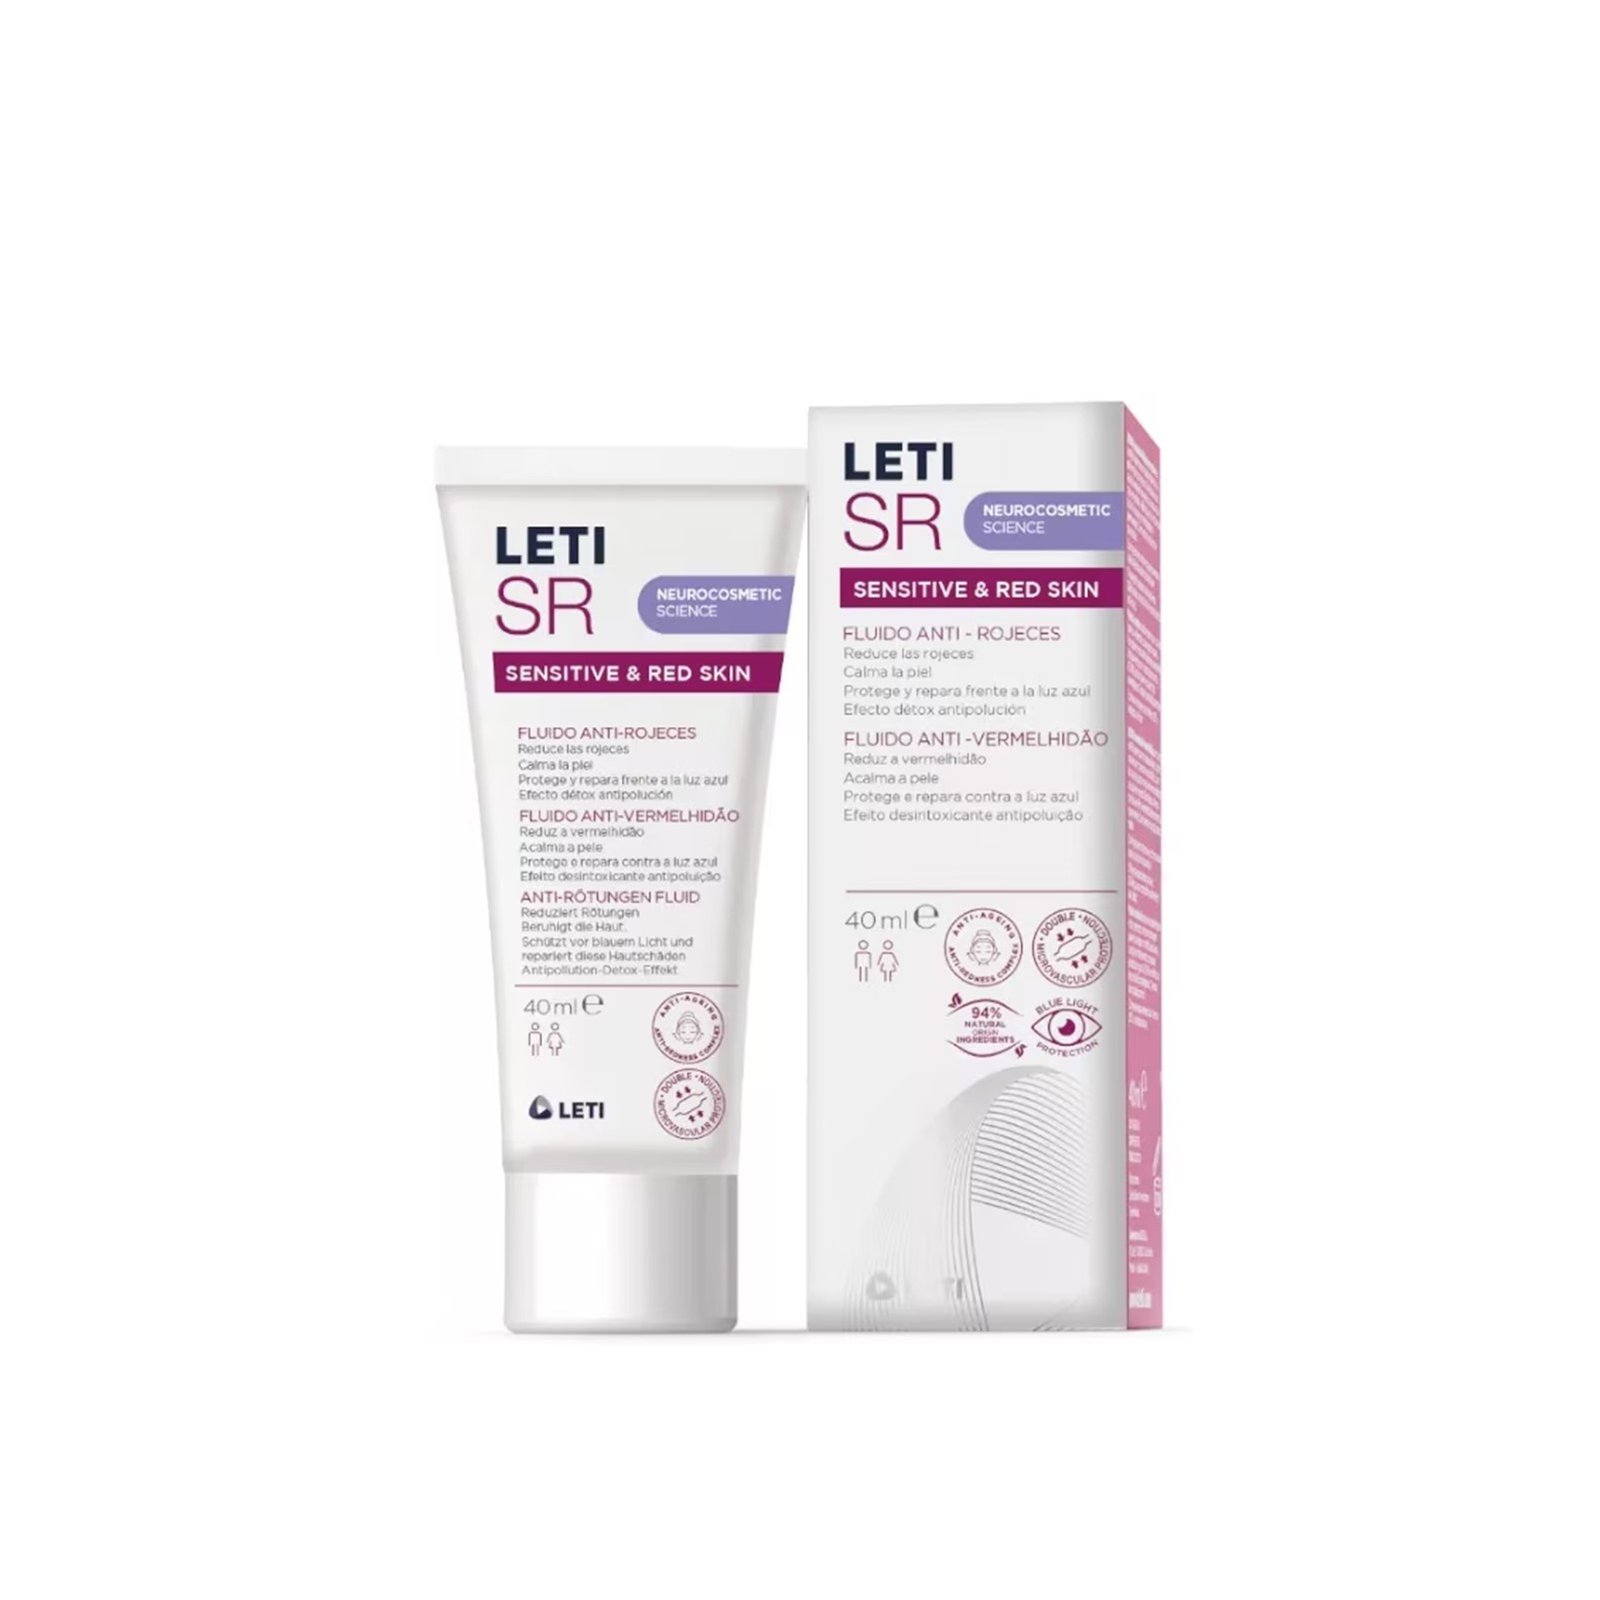 LETI SR Sensitive & Red Skin Anti-Redness Fluid 40ml (1.35 fl oz)